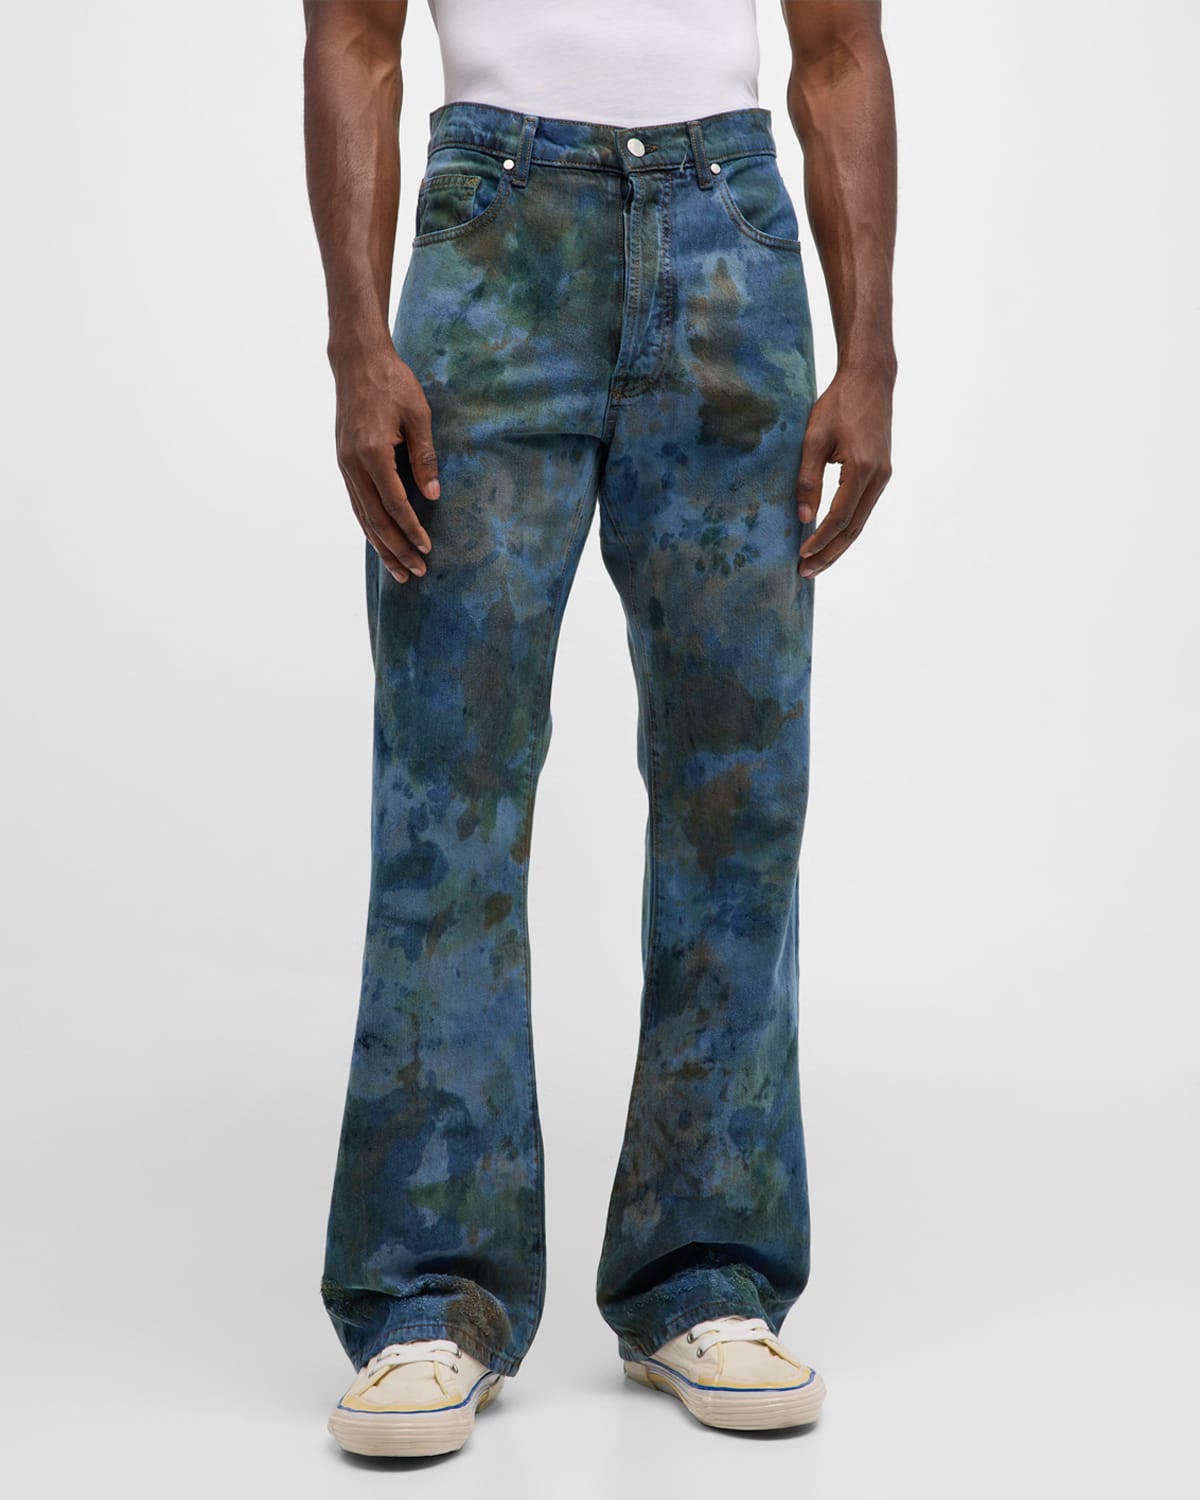 Men's Tie-Dye Studio Jeans